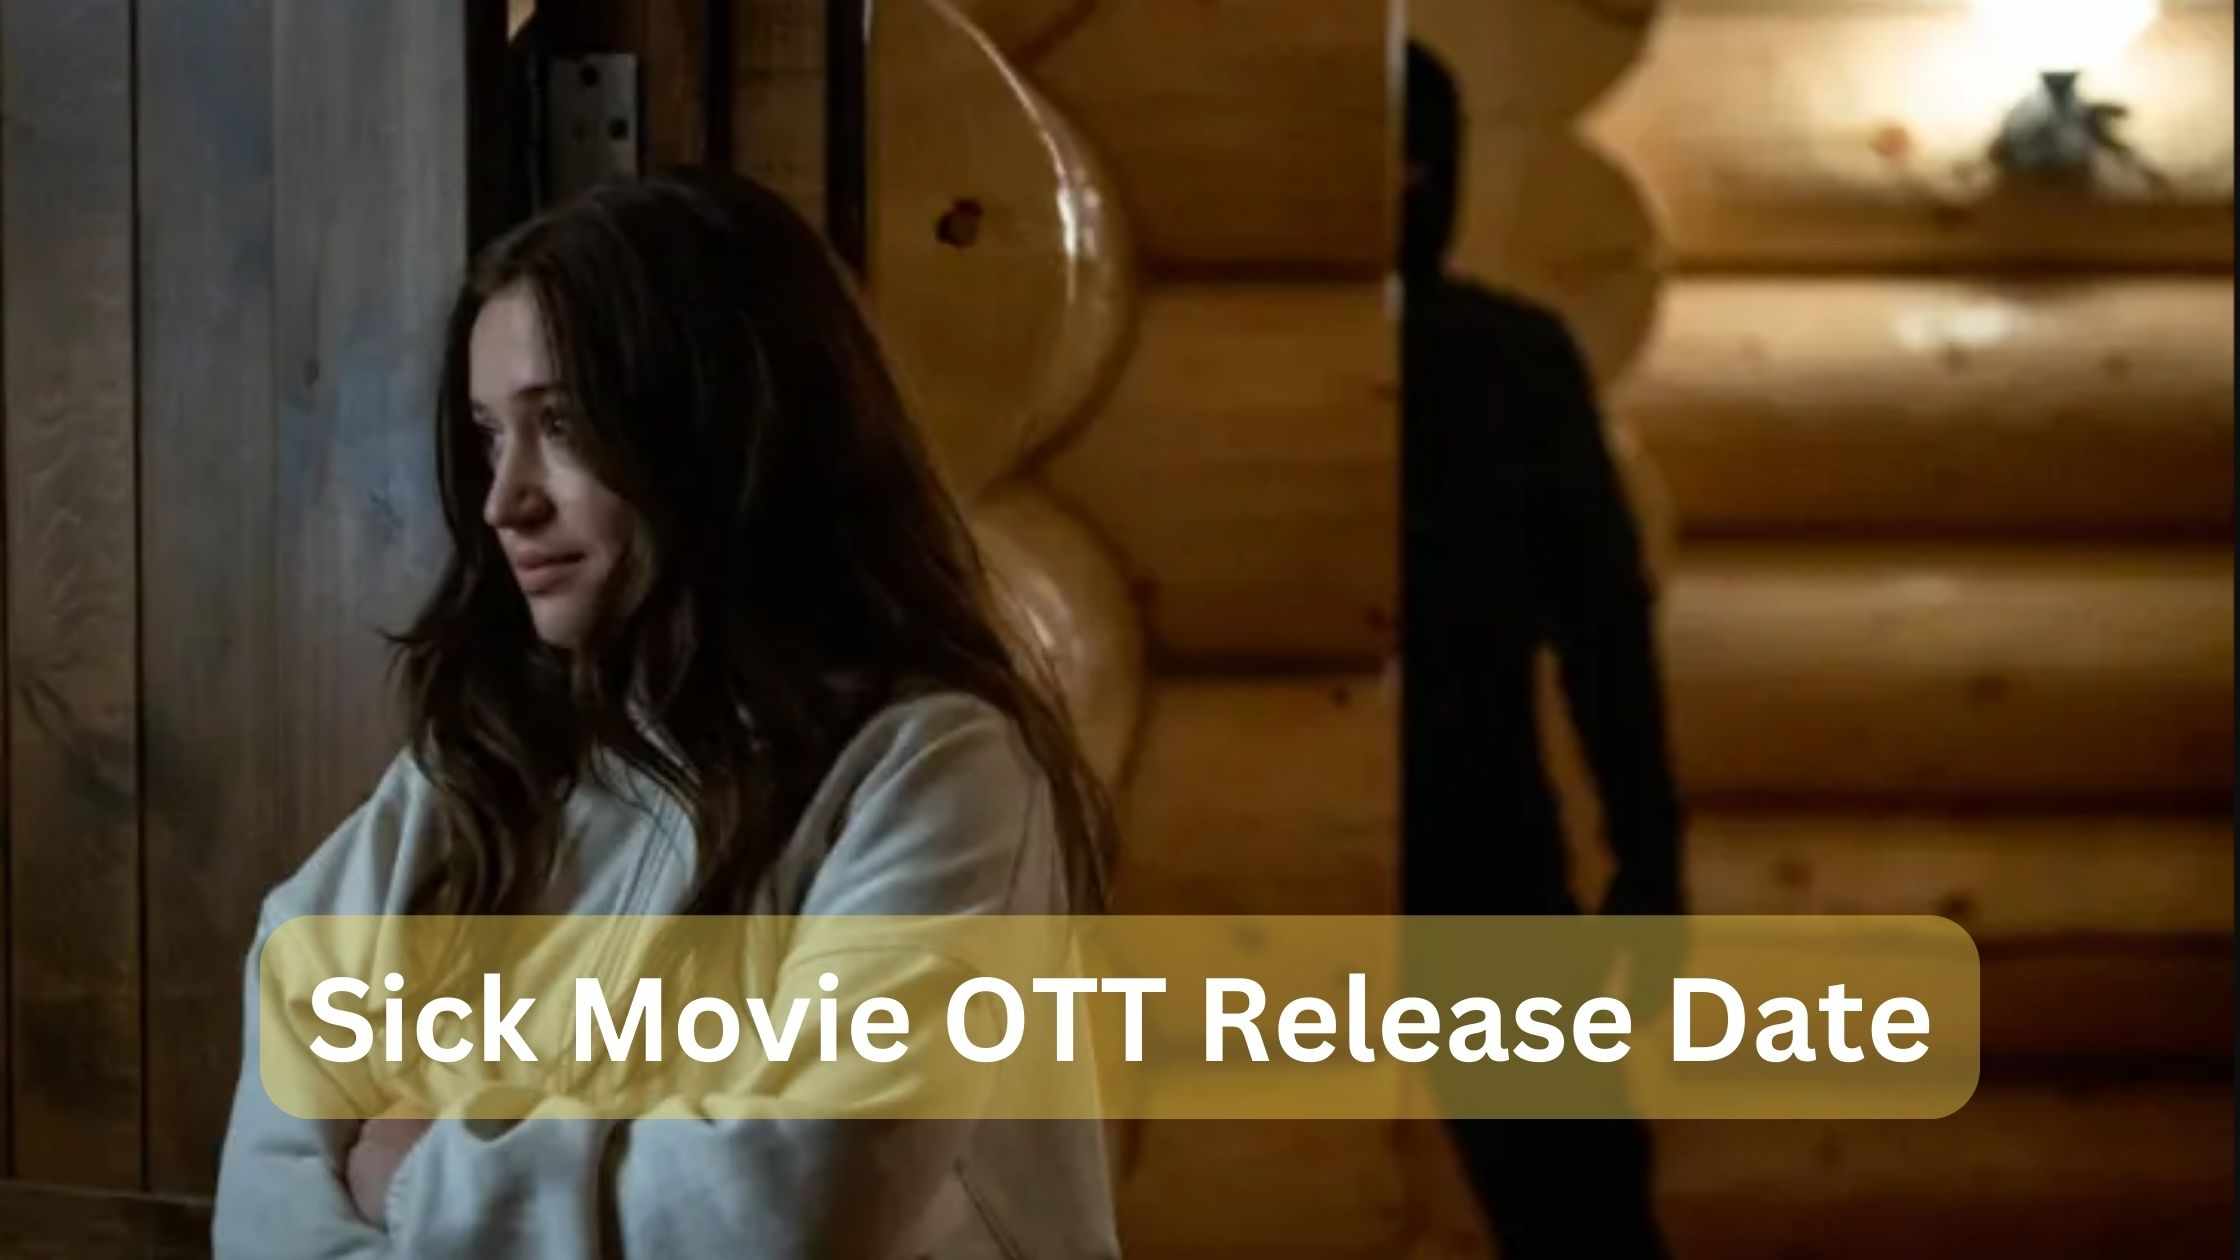 Sick movie OTT release date